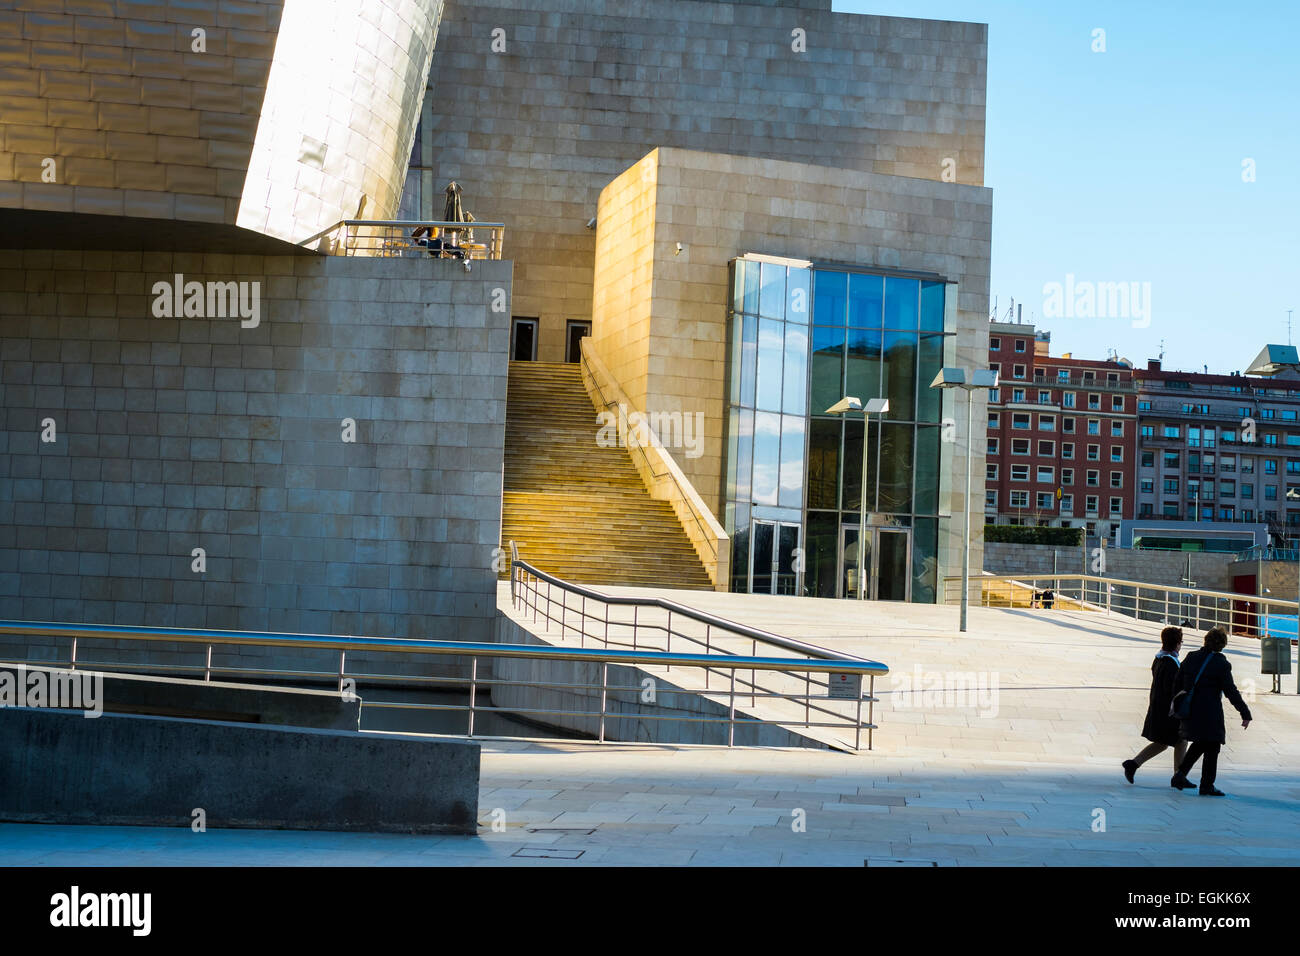 Musée d'Art Moderne Guggenheim Bilbao, Espagne. L'Europe. Banque D'Images